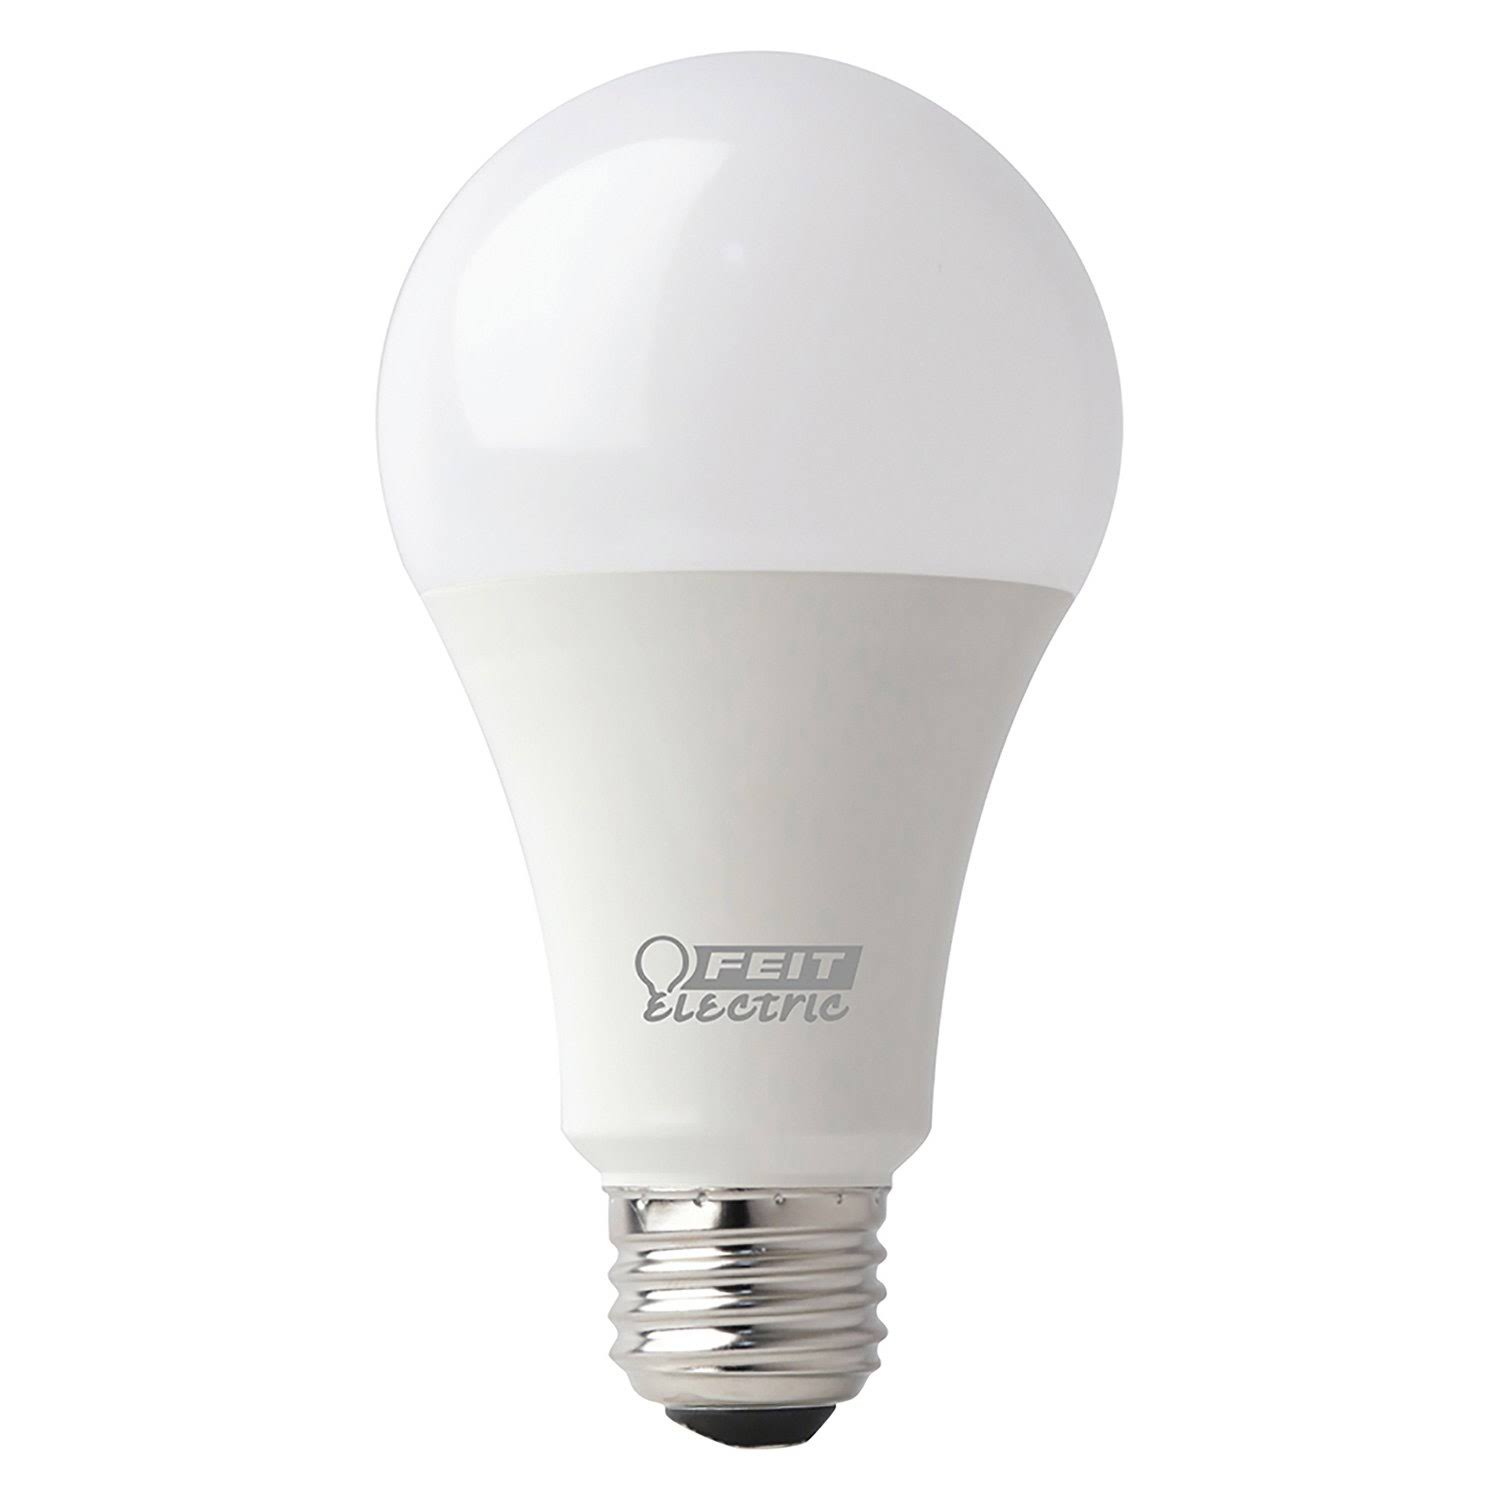 Feit Electric A19 LED Bulb - 15W, 2pk